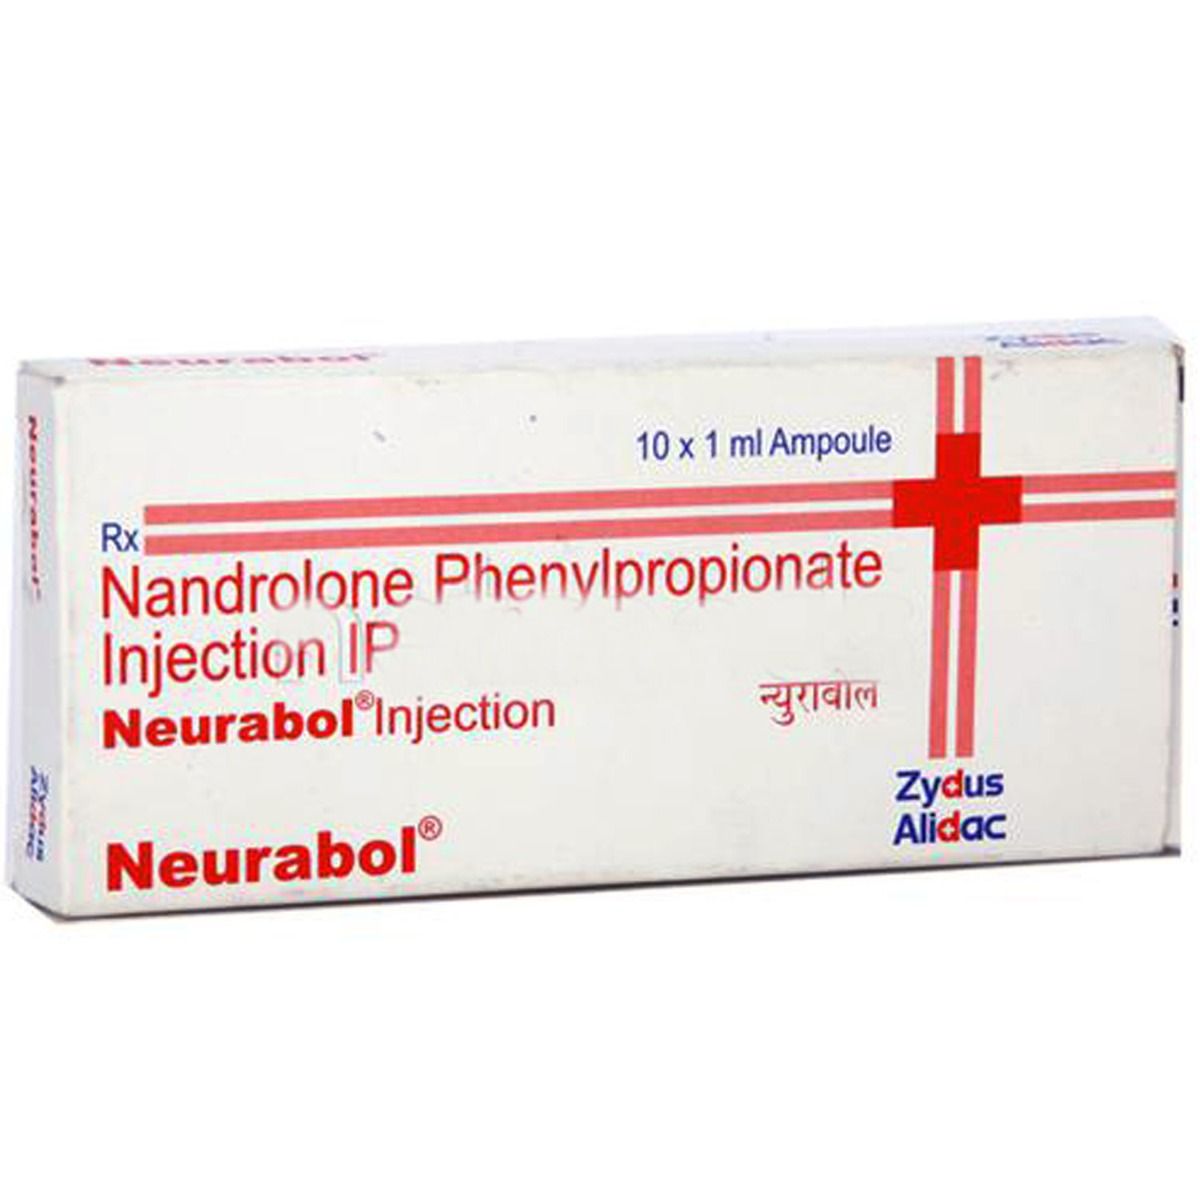 Buy Neurabol Injection 1 ml Online